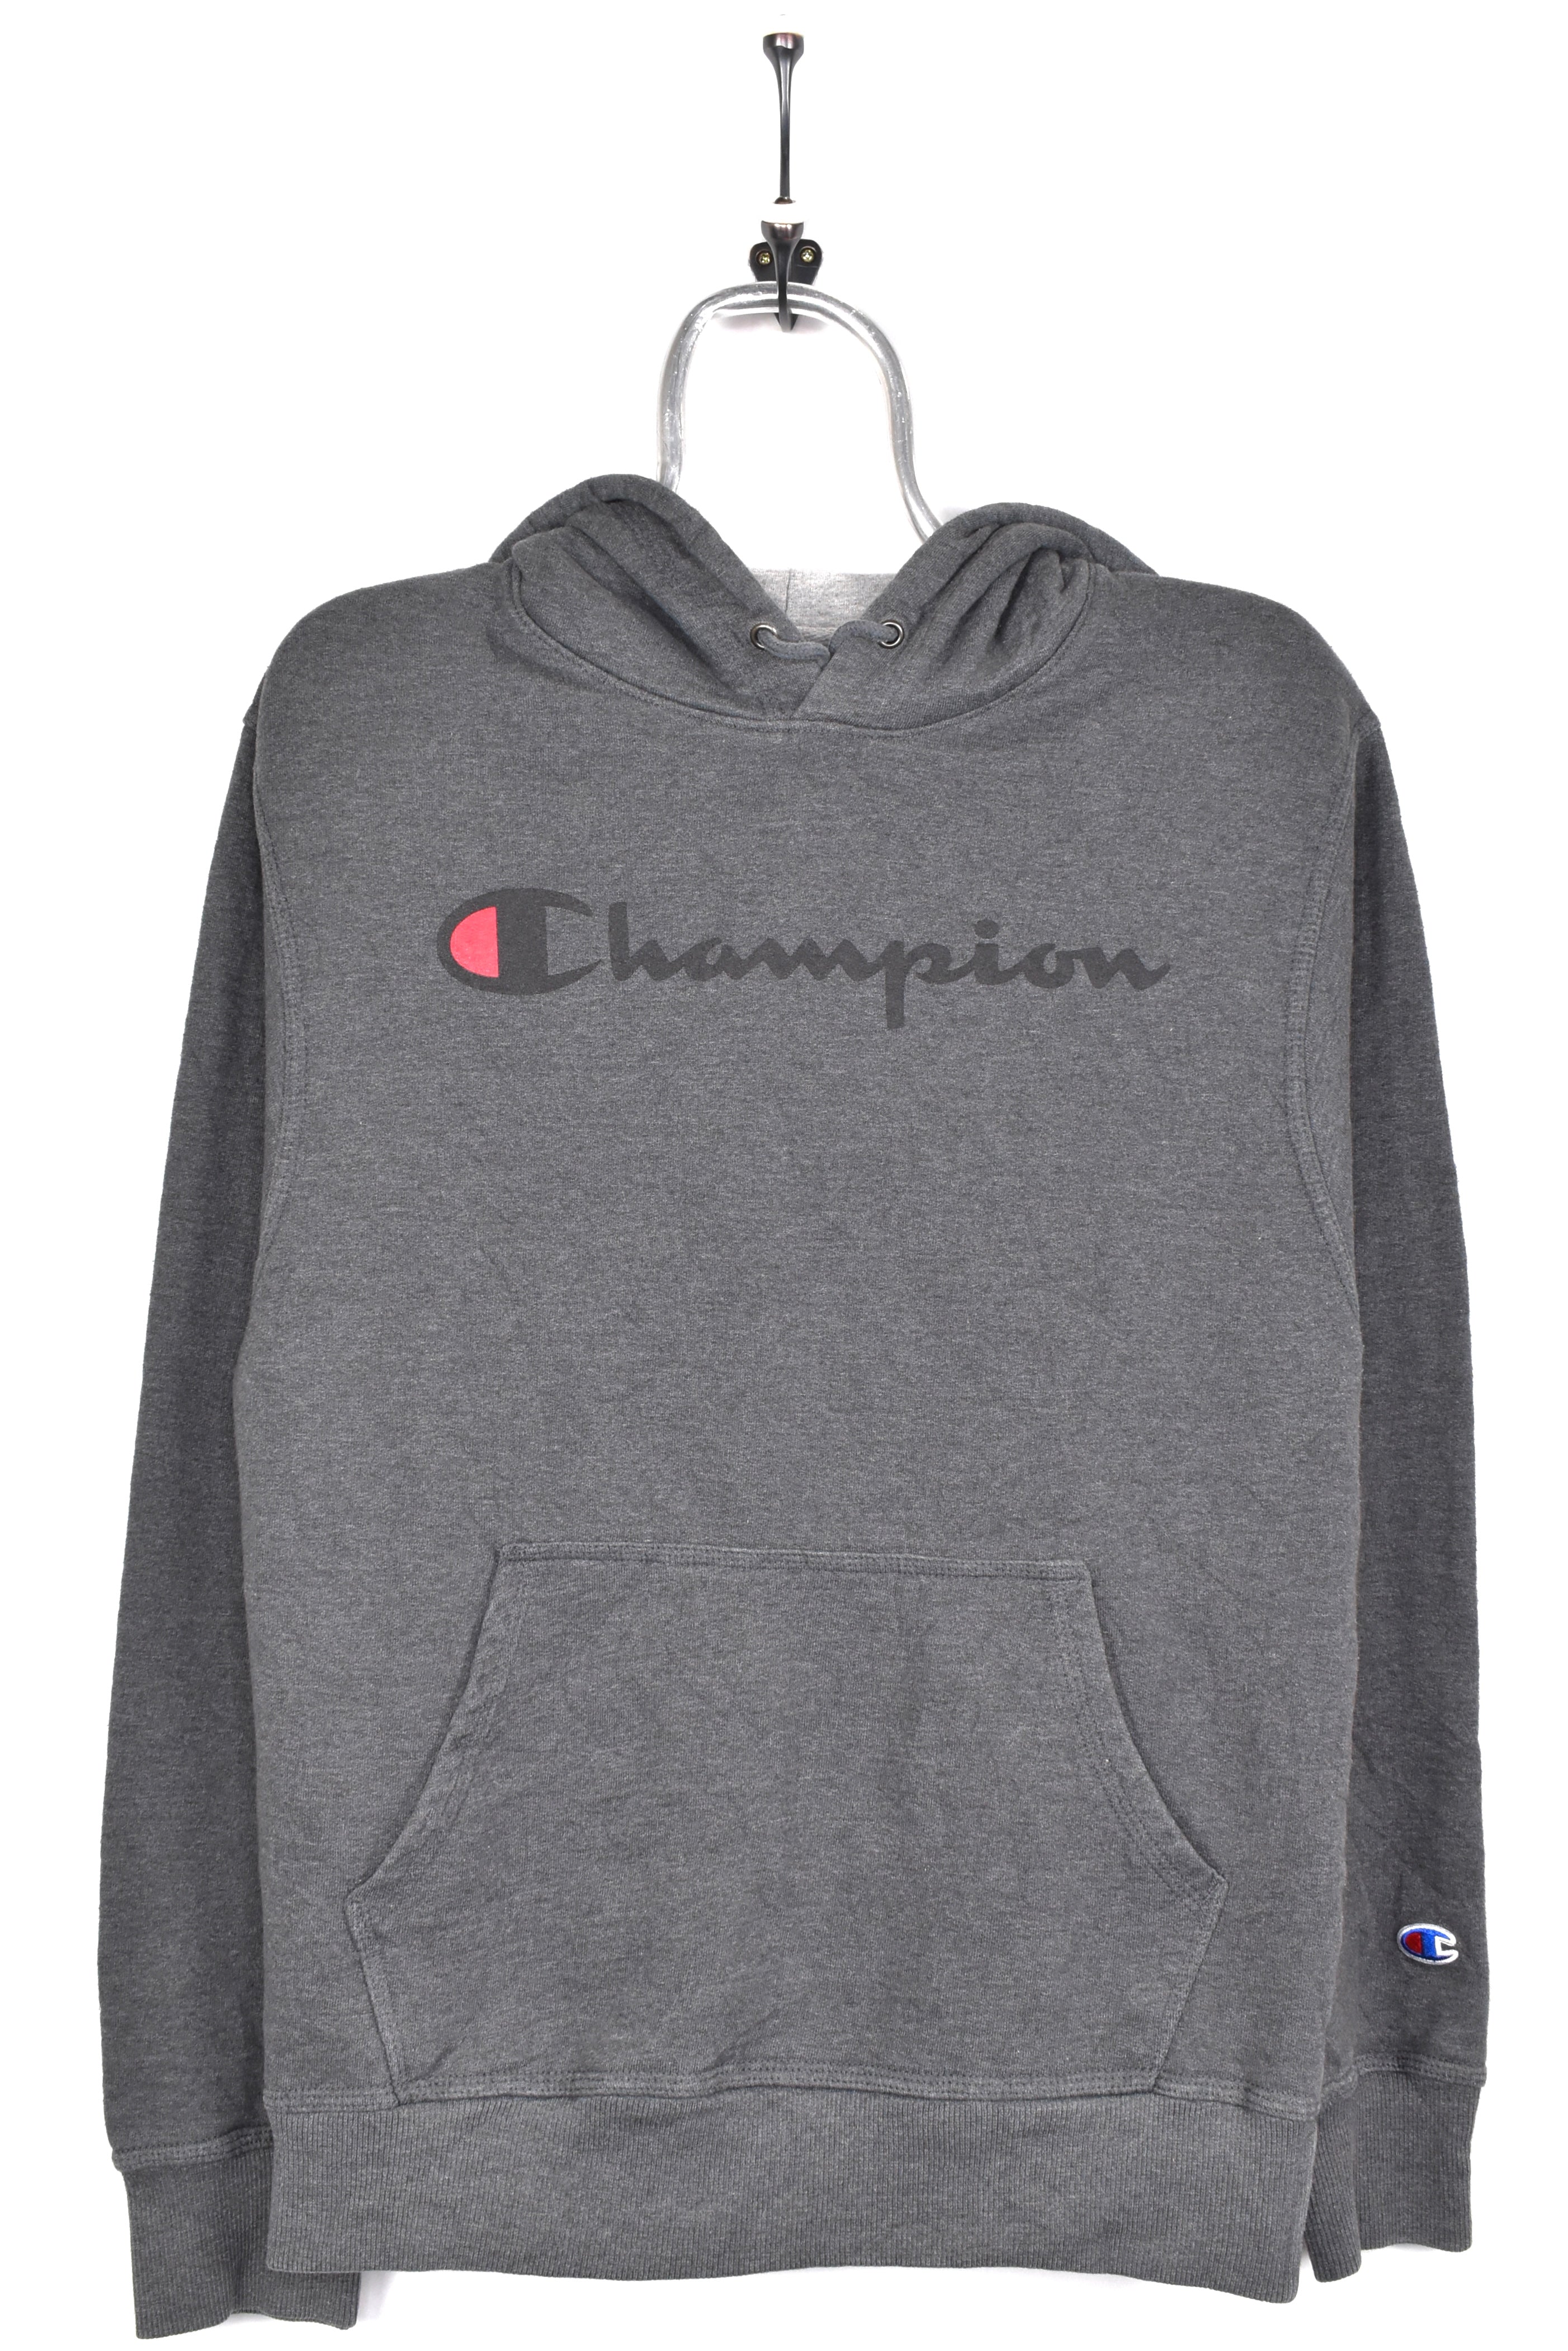 Modern Champion hoodie, grey graphic sweatshirt - AU Small CHAMPION